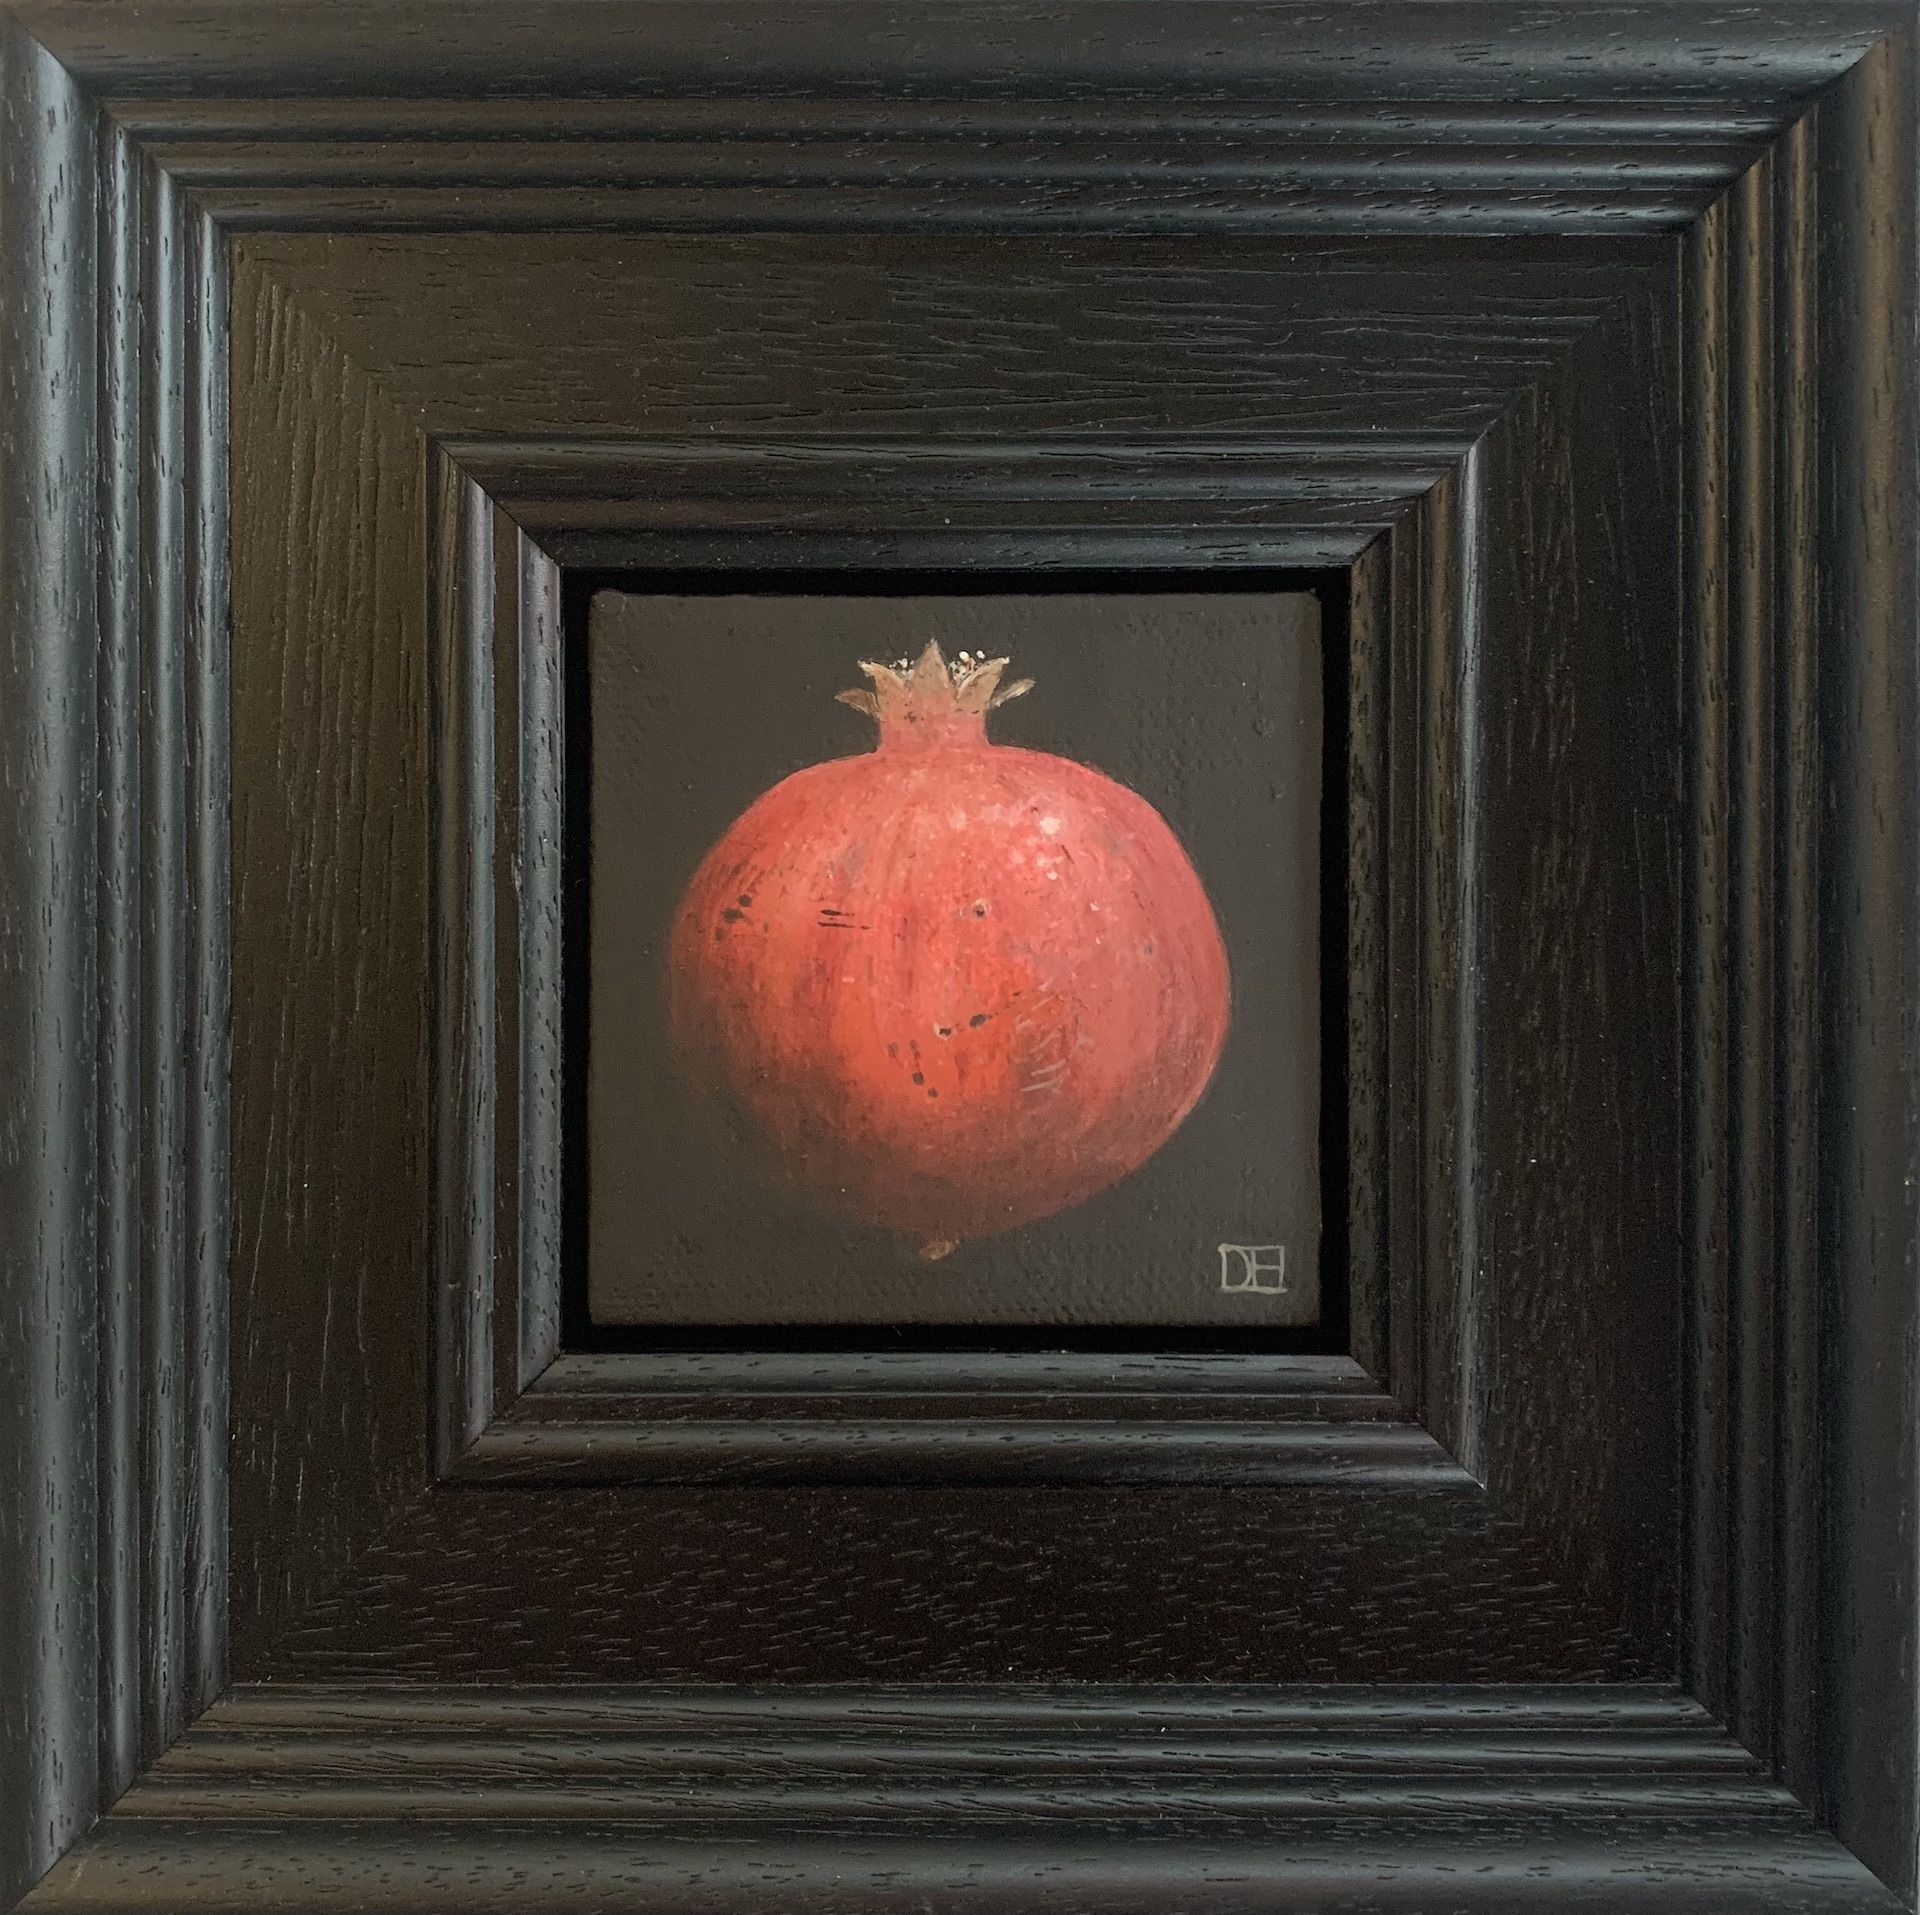 Pocket Red Pomegranate by Dani Humberstone